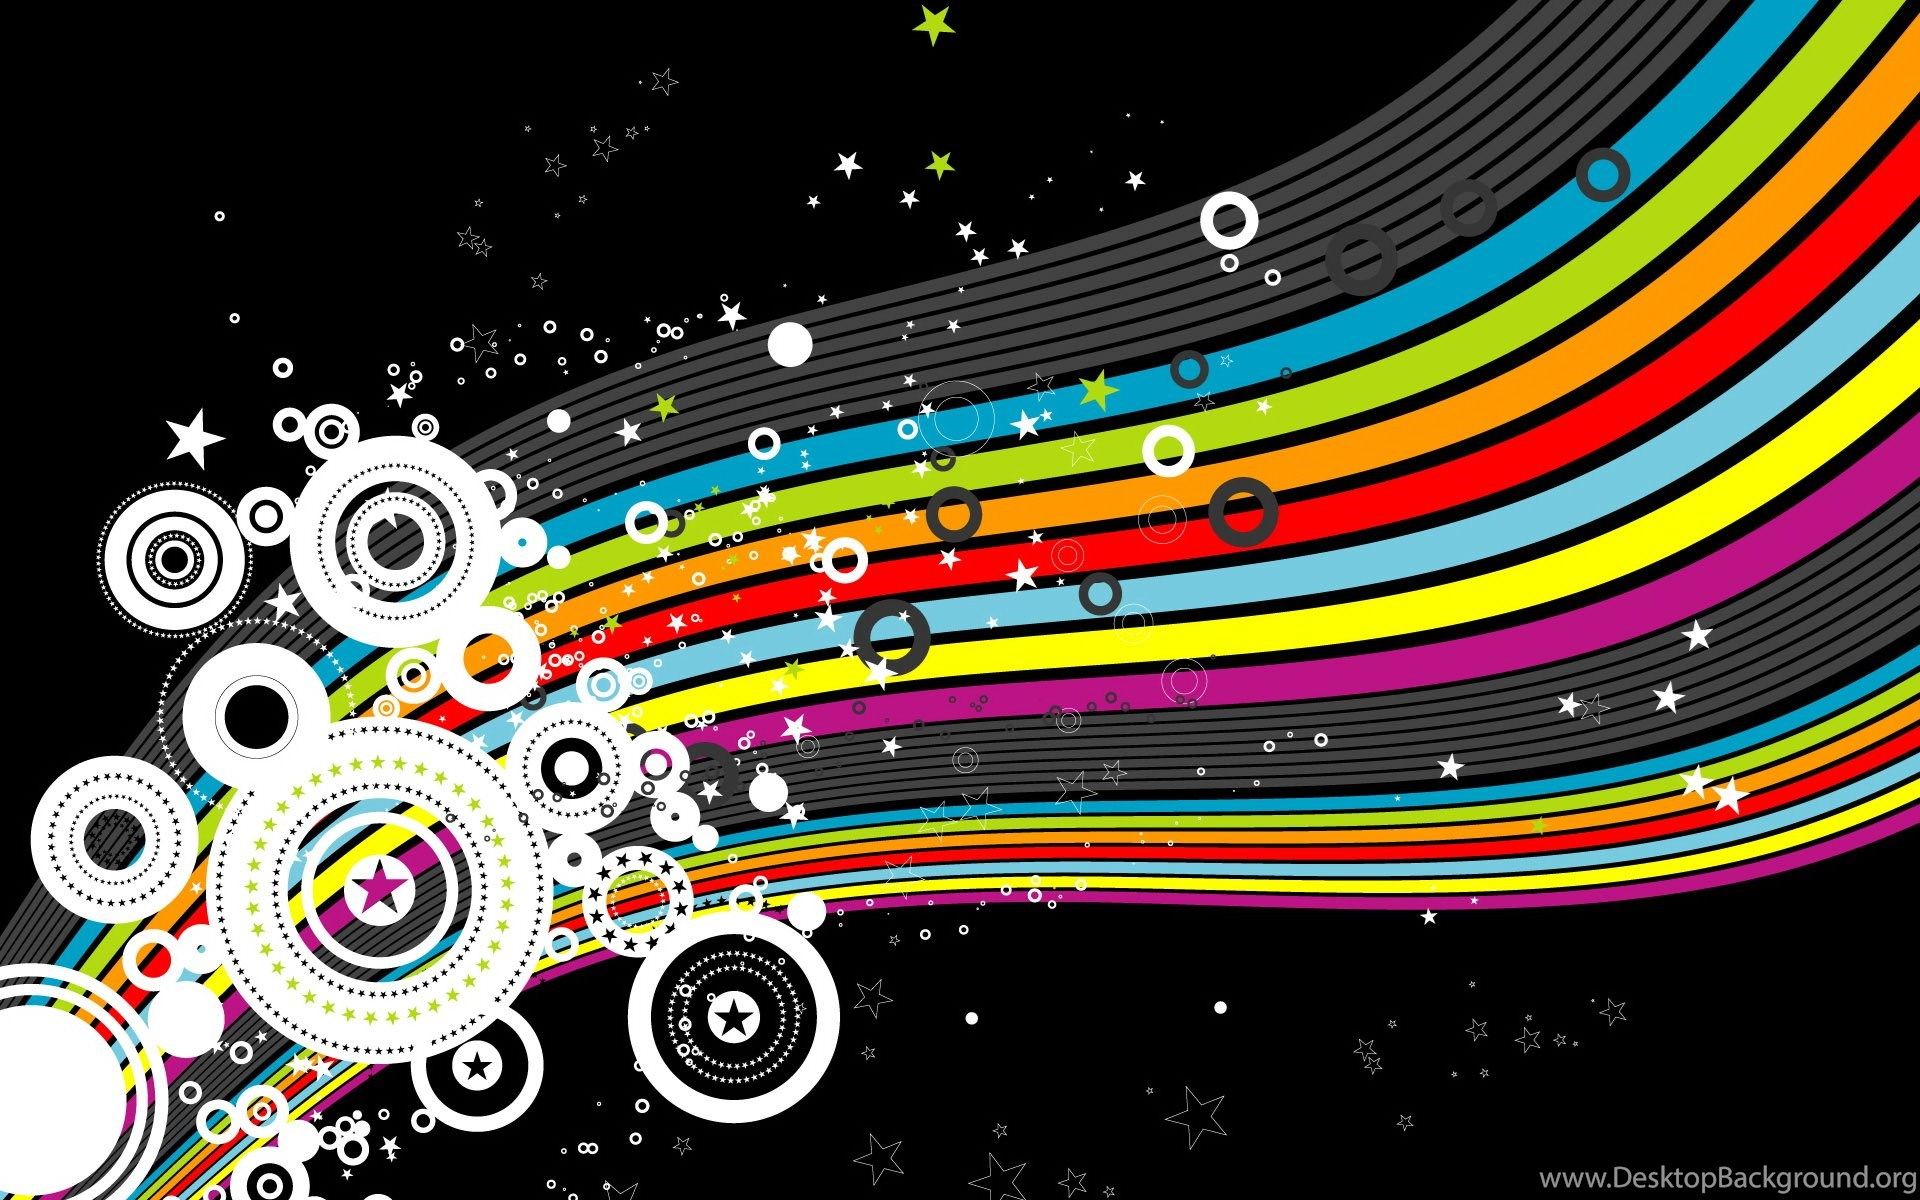 Download The Retro Rainbow Wallpaper, Retro Rainbow iPhone. Desktop Background